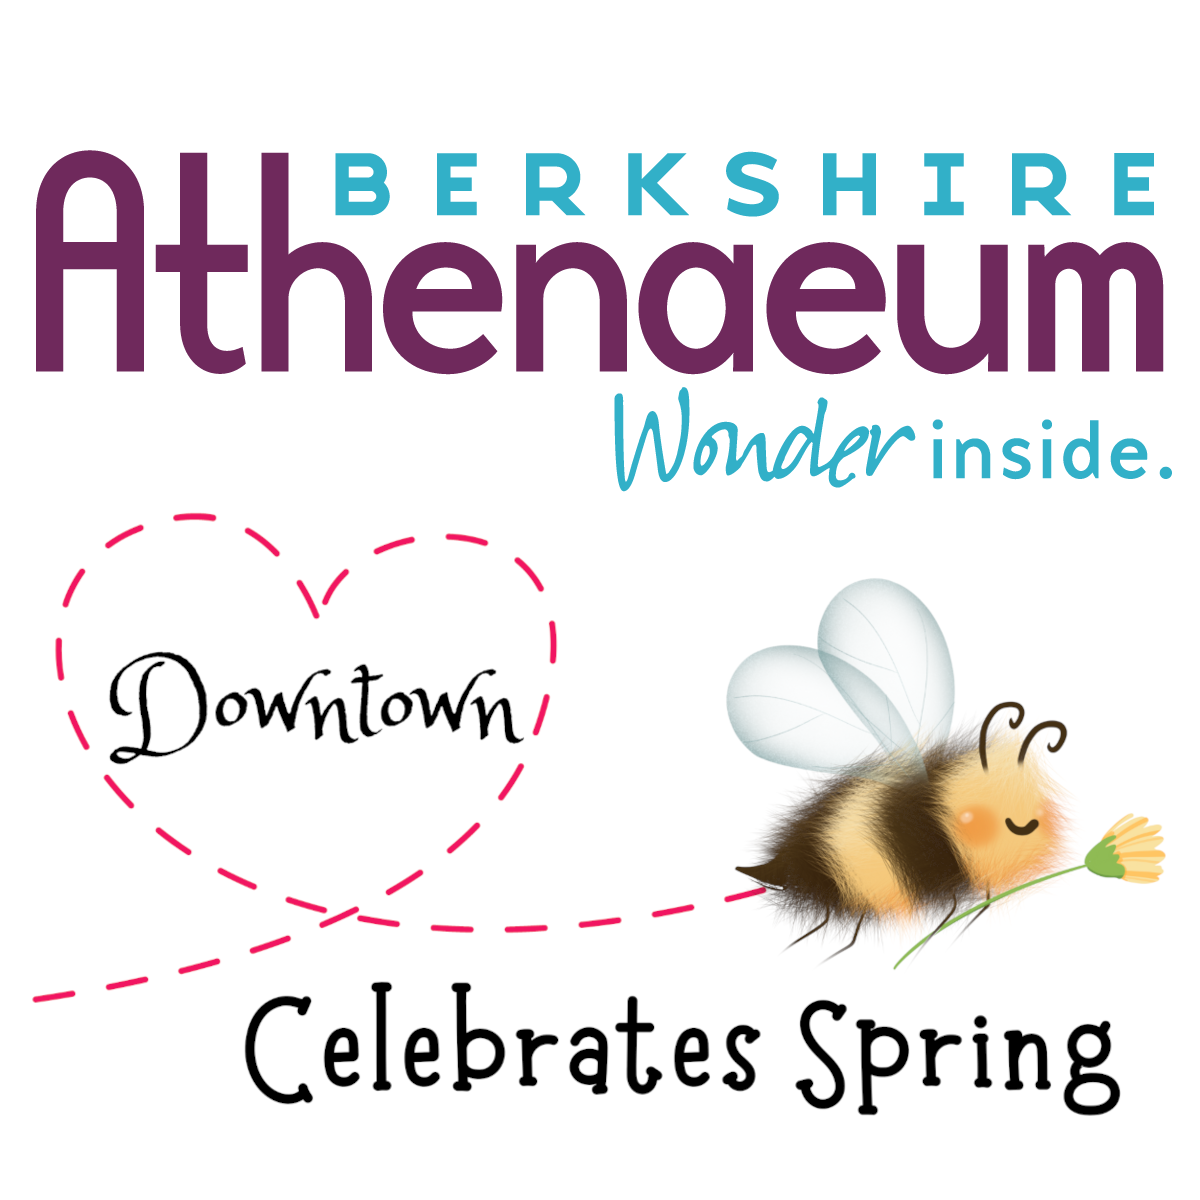 April Vacation Programs at the Berkshire Athenaeum